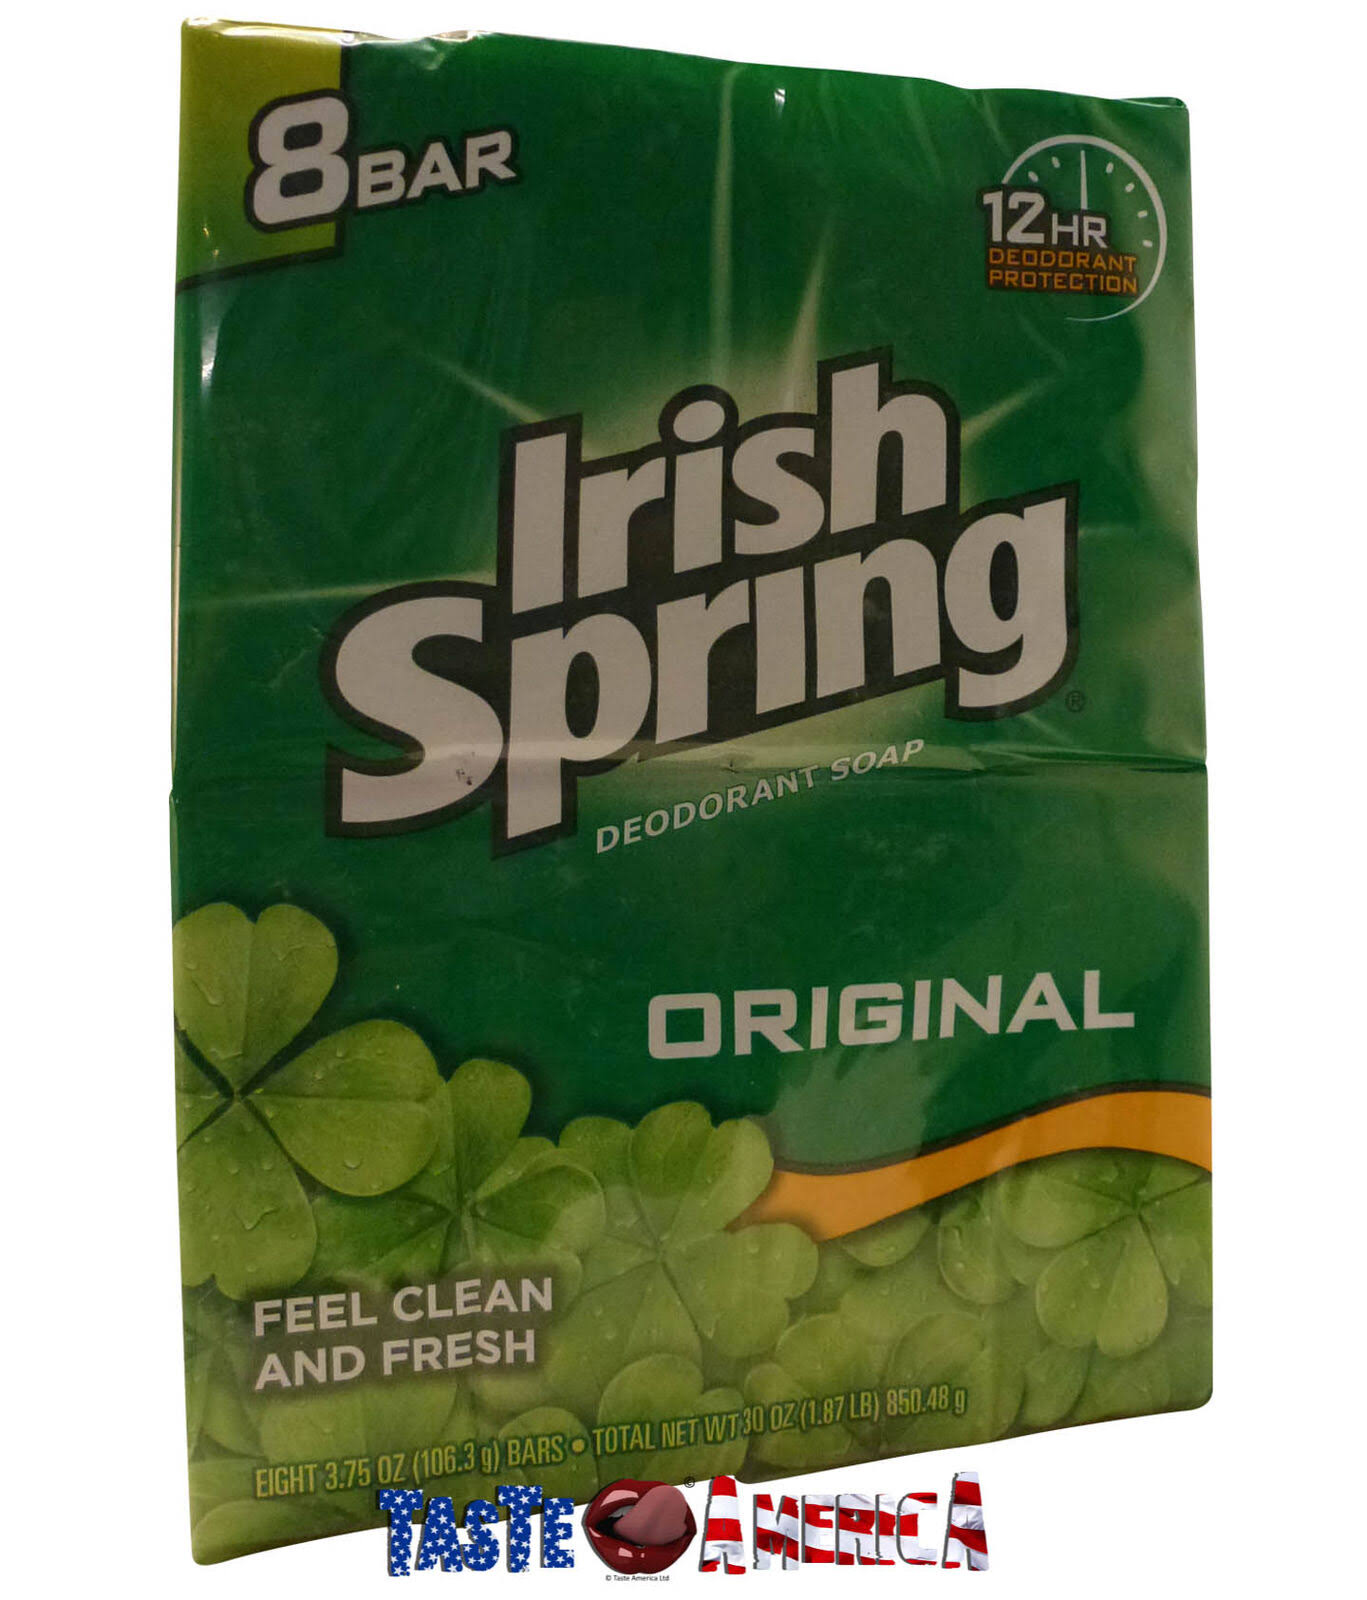 Irish Spring Original Deodorant Soap Bar - 3.75oz, 8 Pack